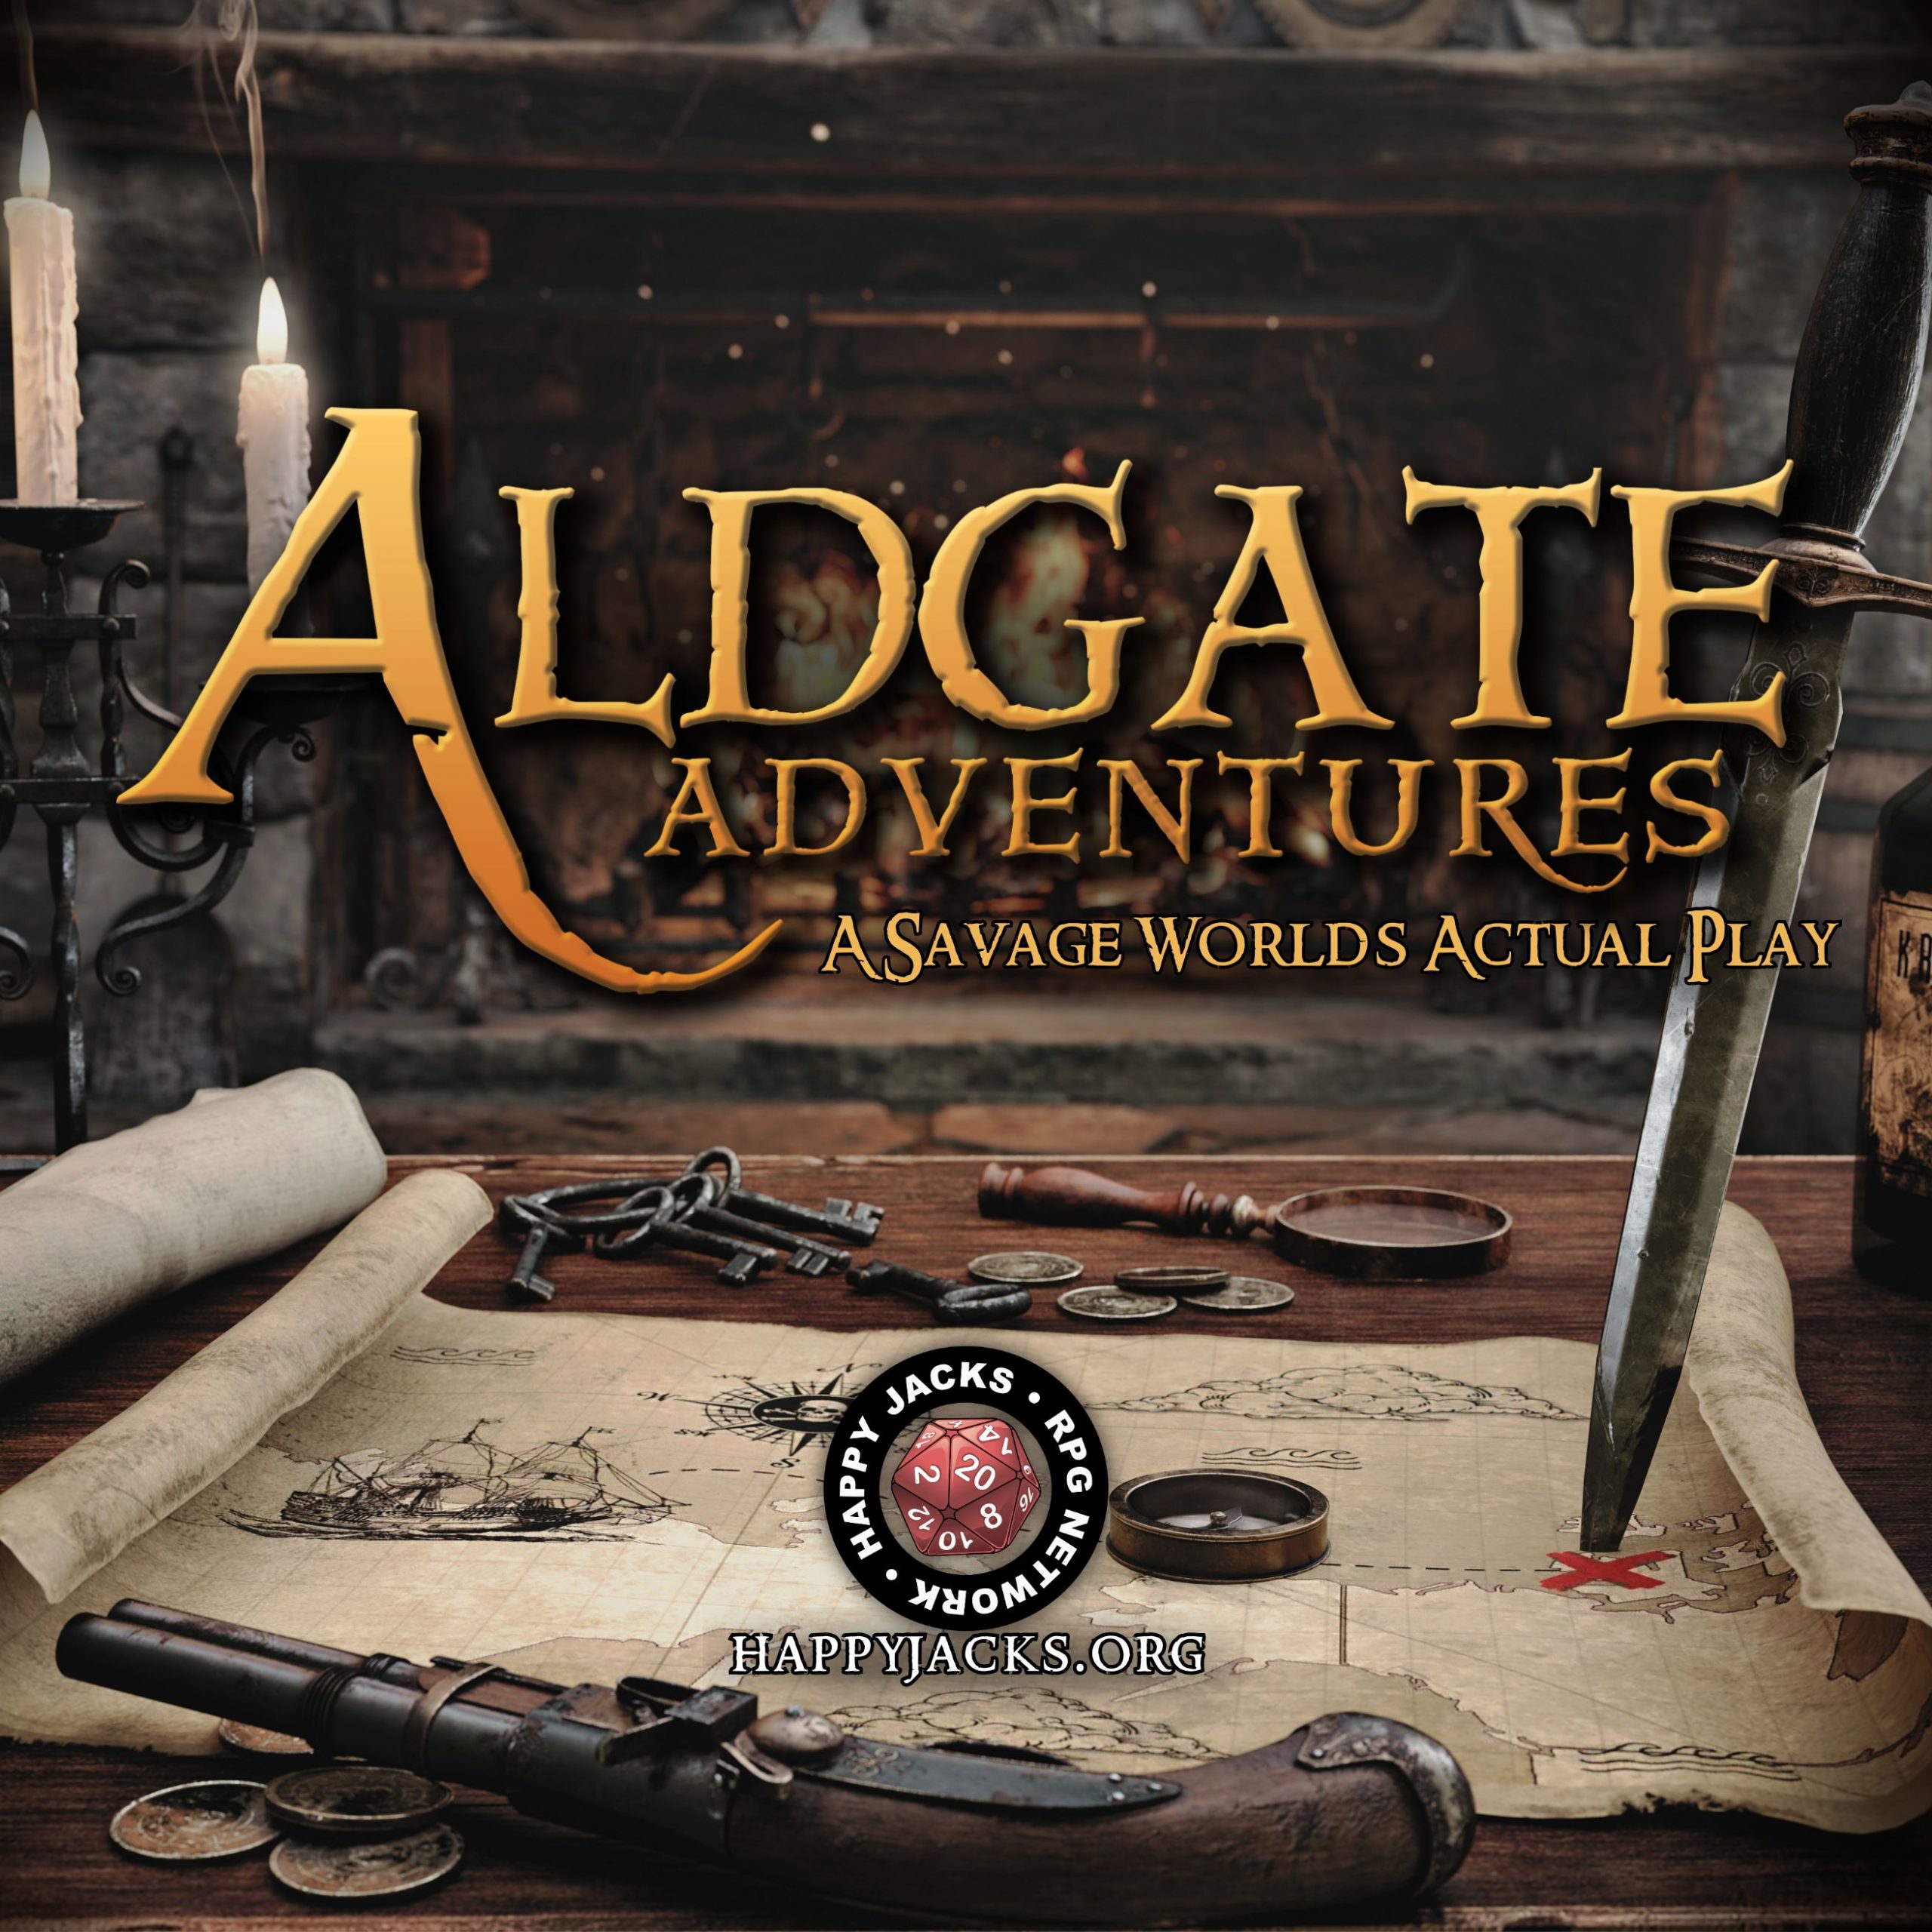 ALDGATE03 The Scent of Lies | Aldgate Adventures | Savage Worlds